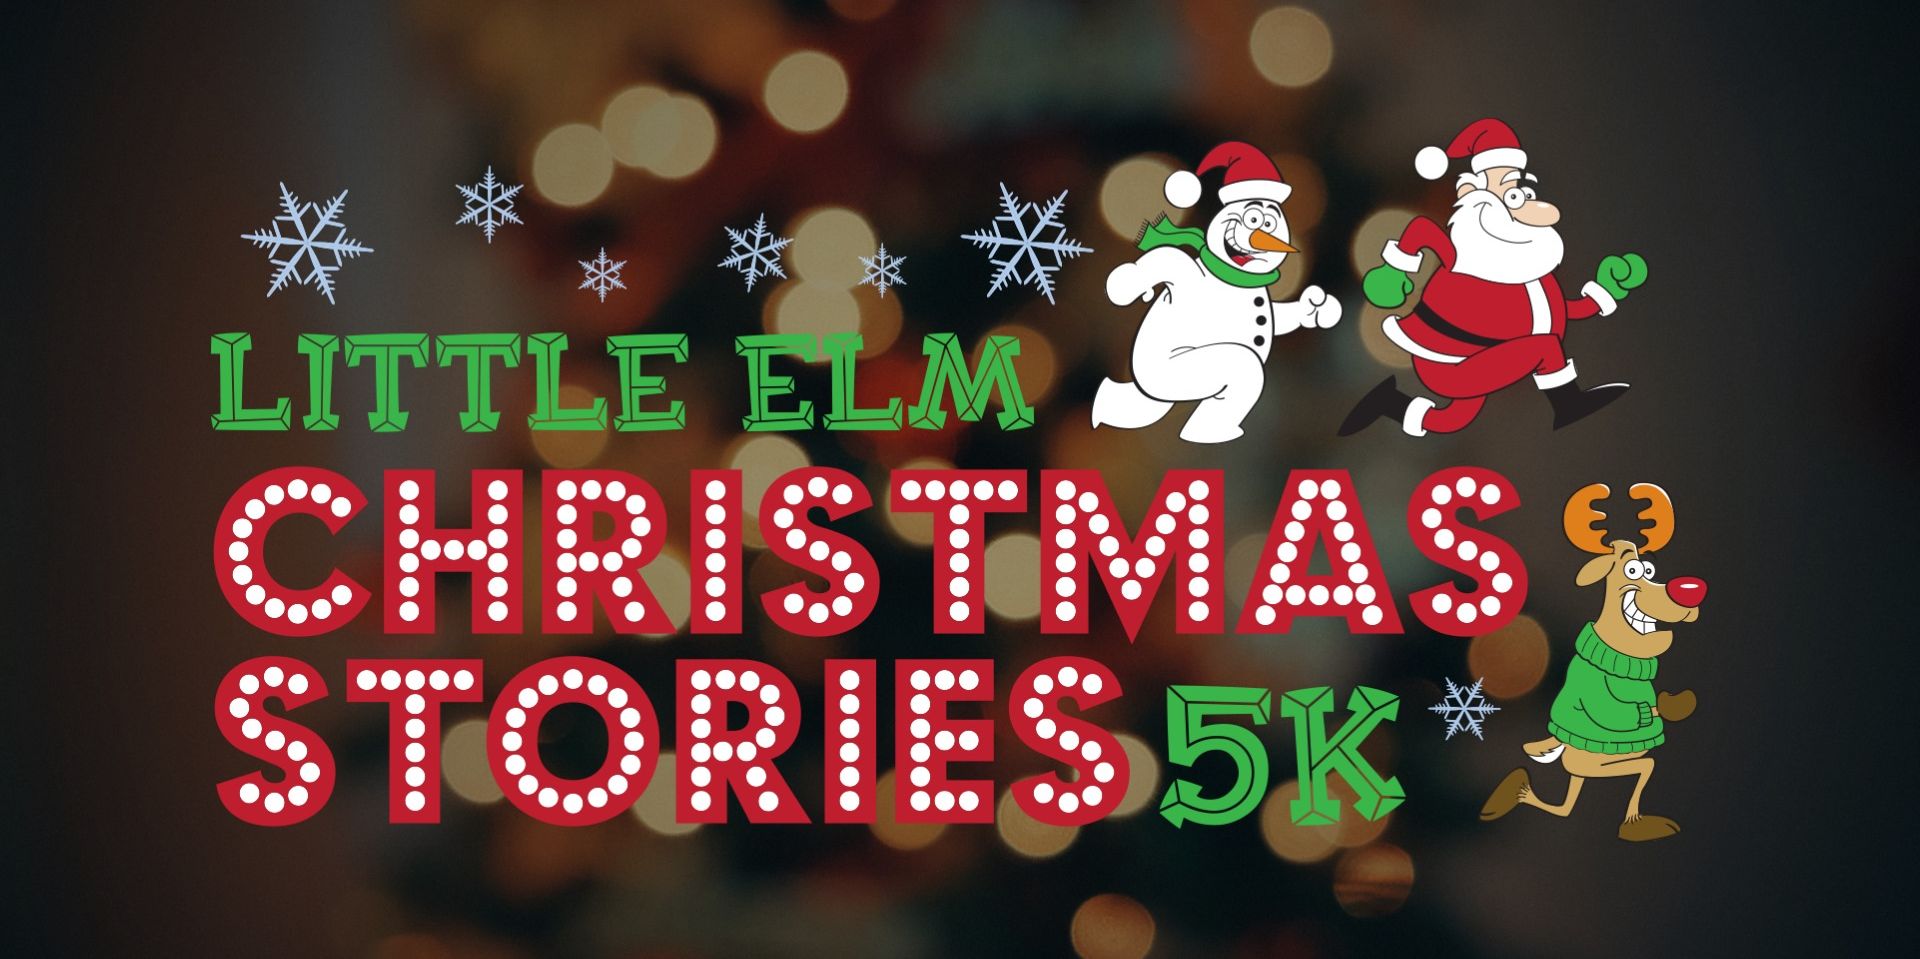 Little Elm Christmas Stories 5K promotional image